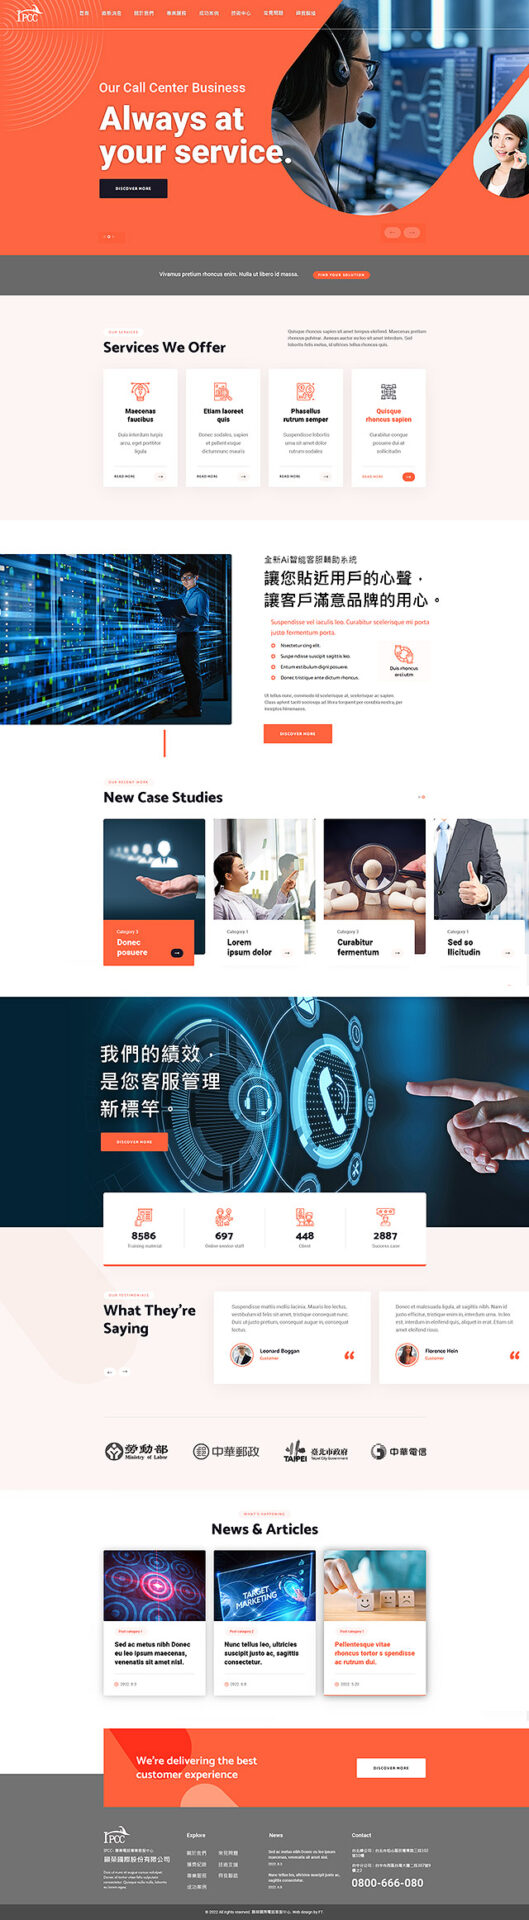 ipcc, 顯榮,顯榮國際網頁設計,call center hmepage design